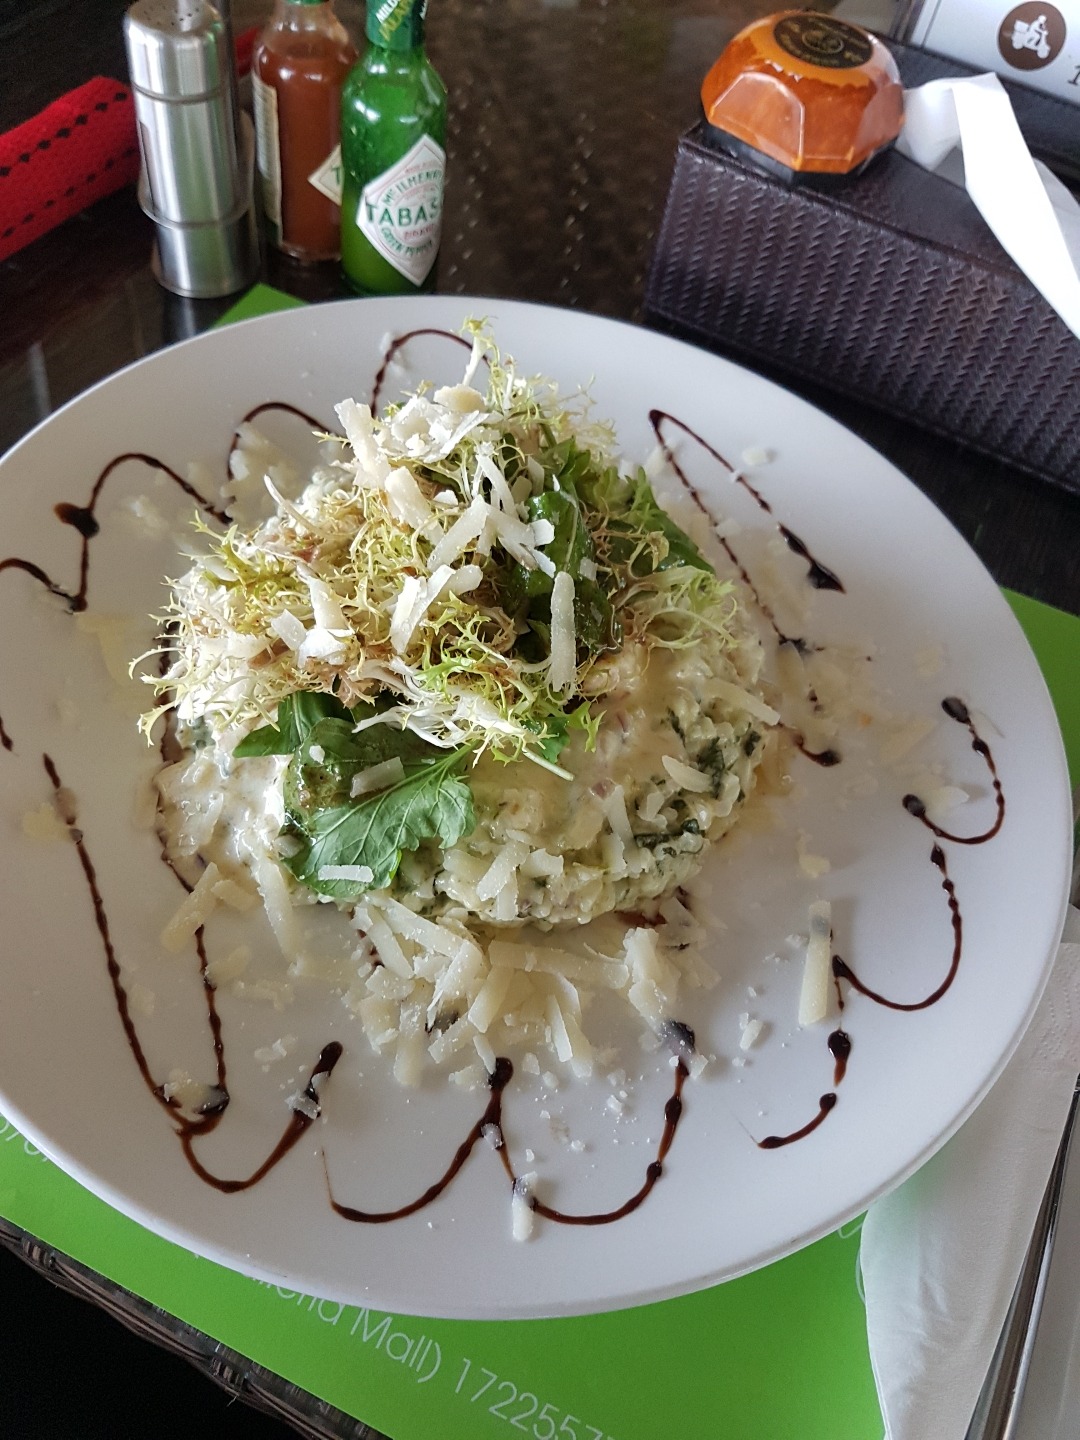 Prawn risotto is my fav @ Macchiato Cafe - Bahrain